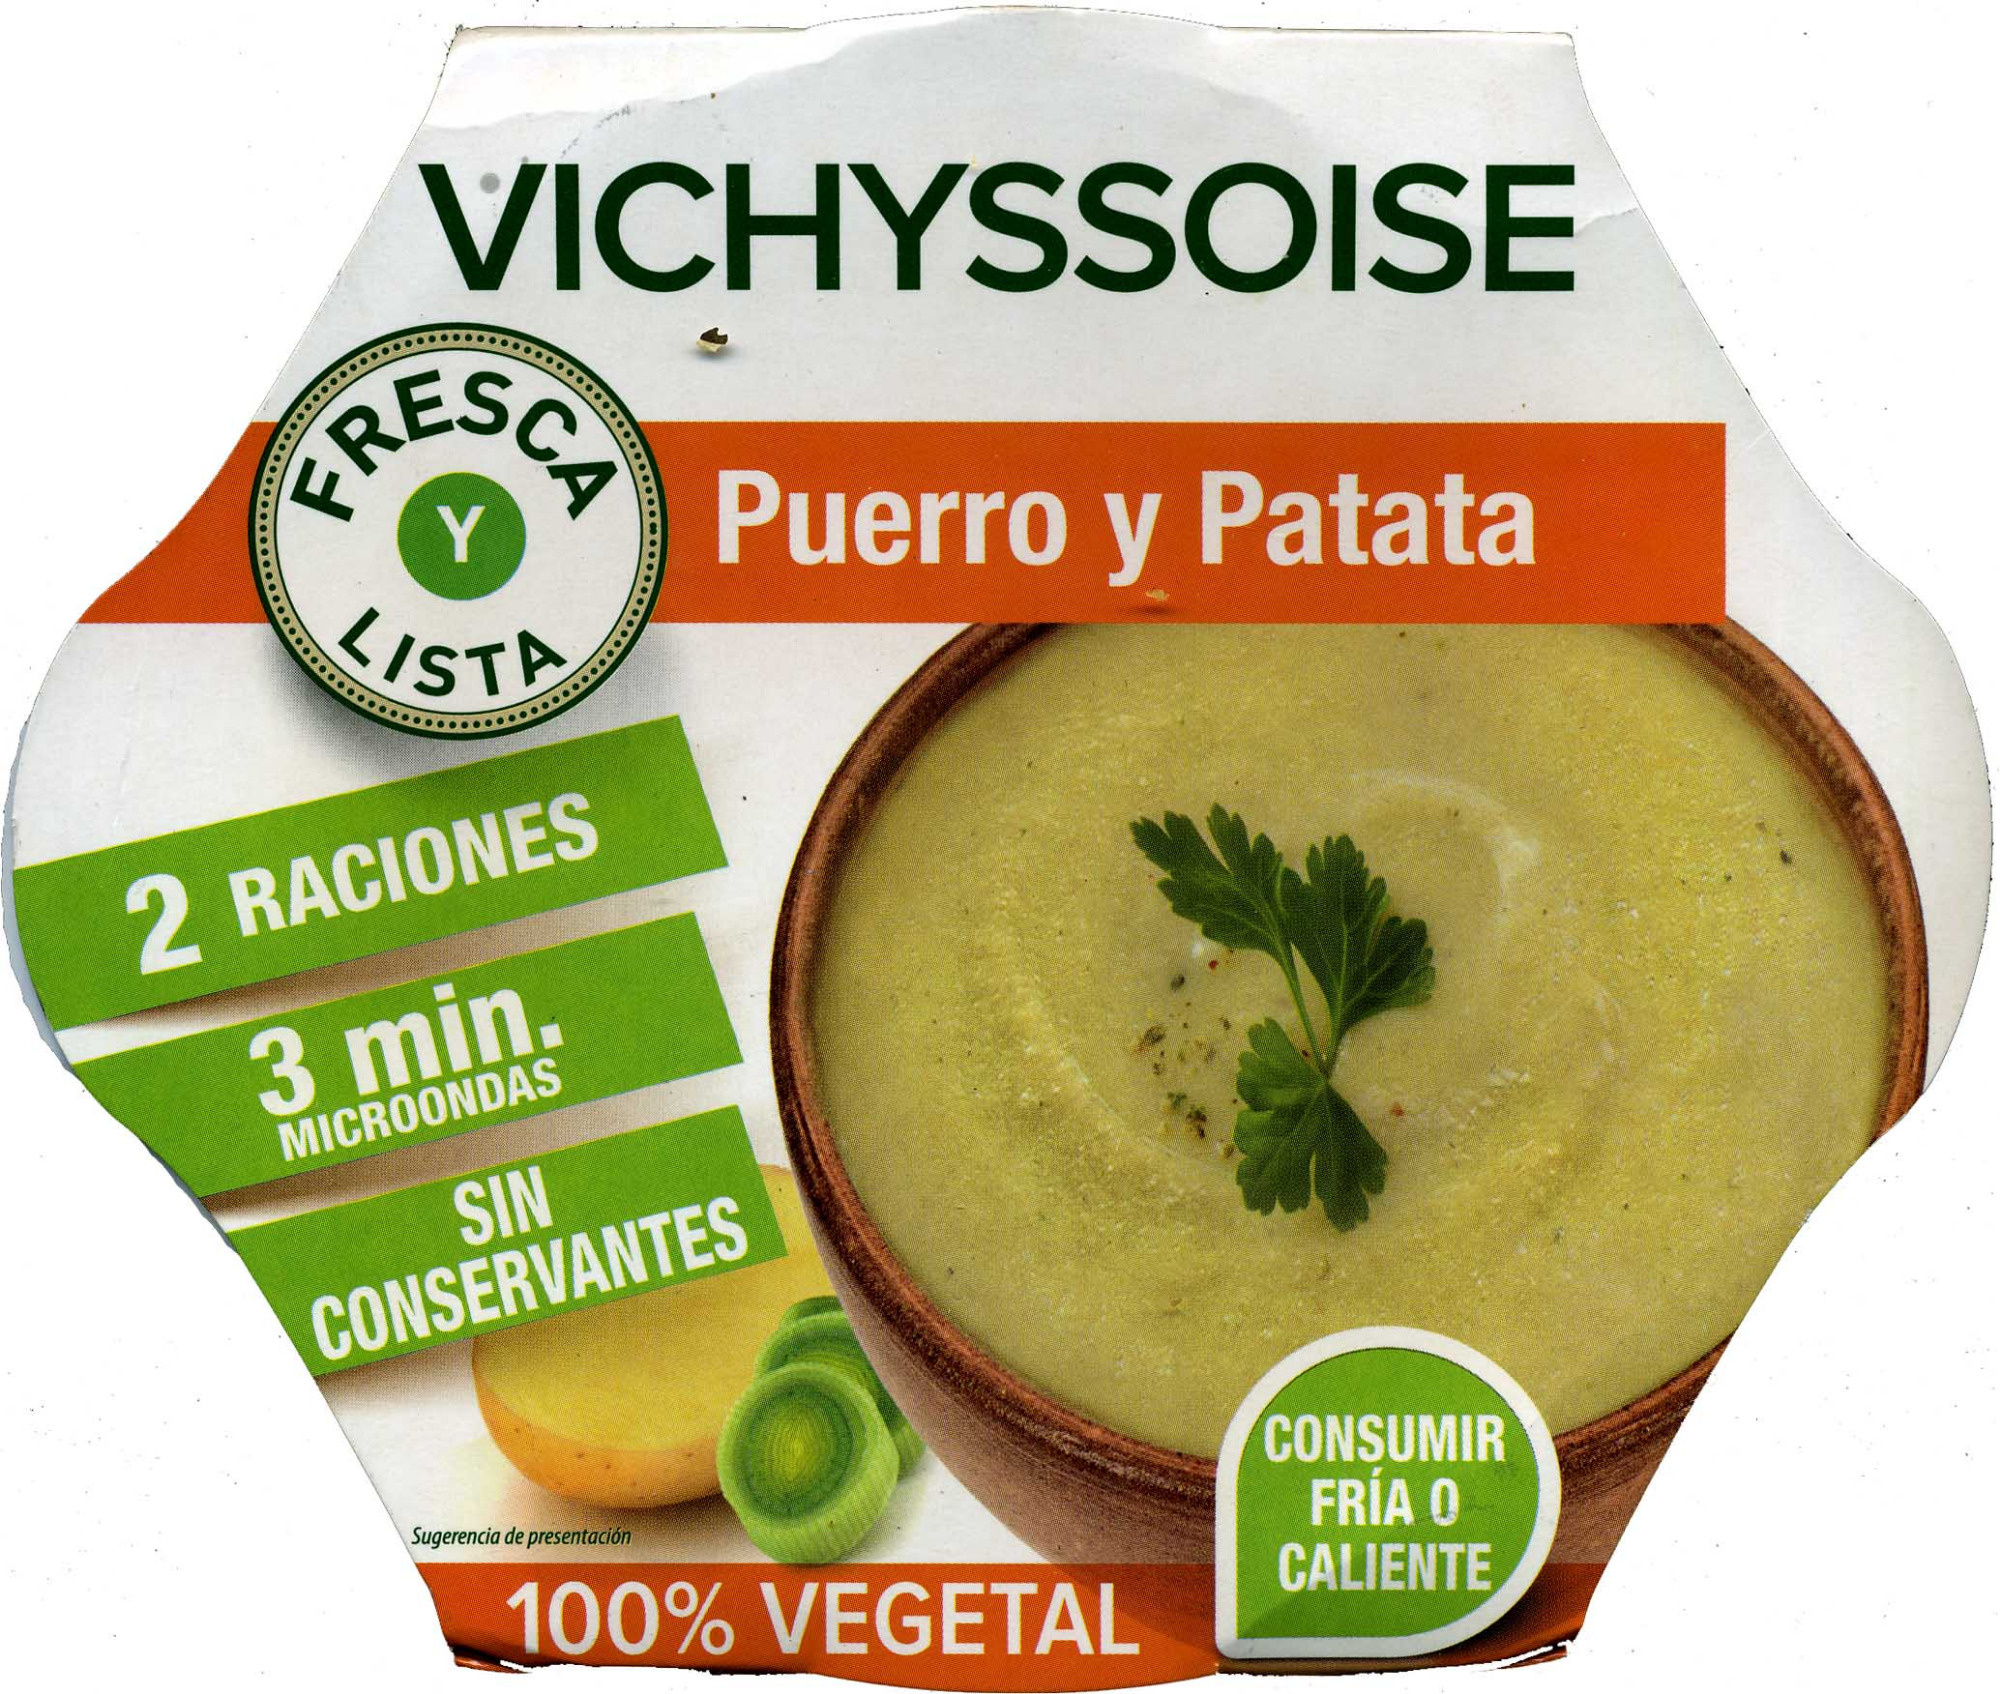 Vichyssoise Puerro y Patata - Producto